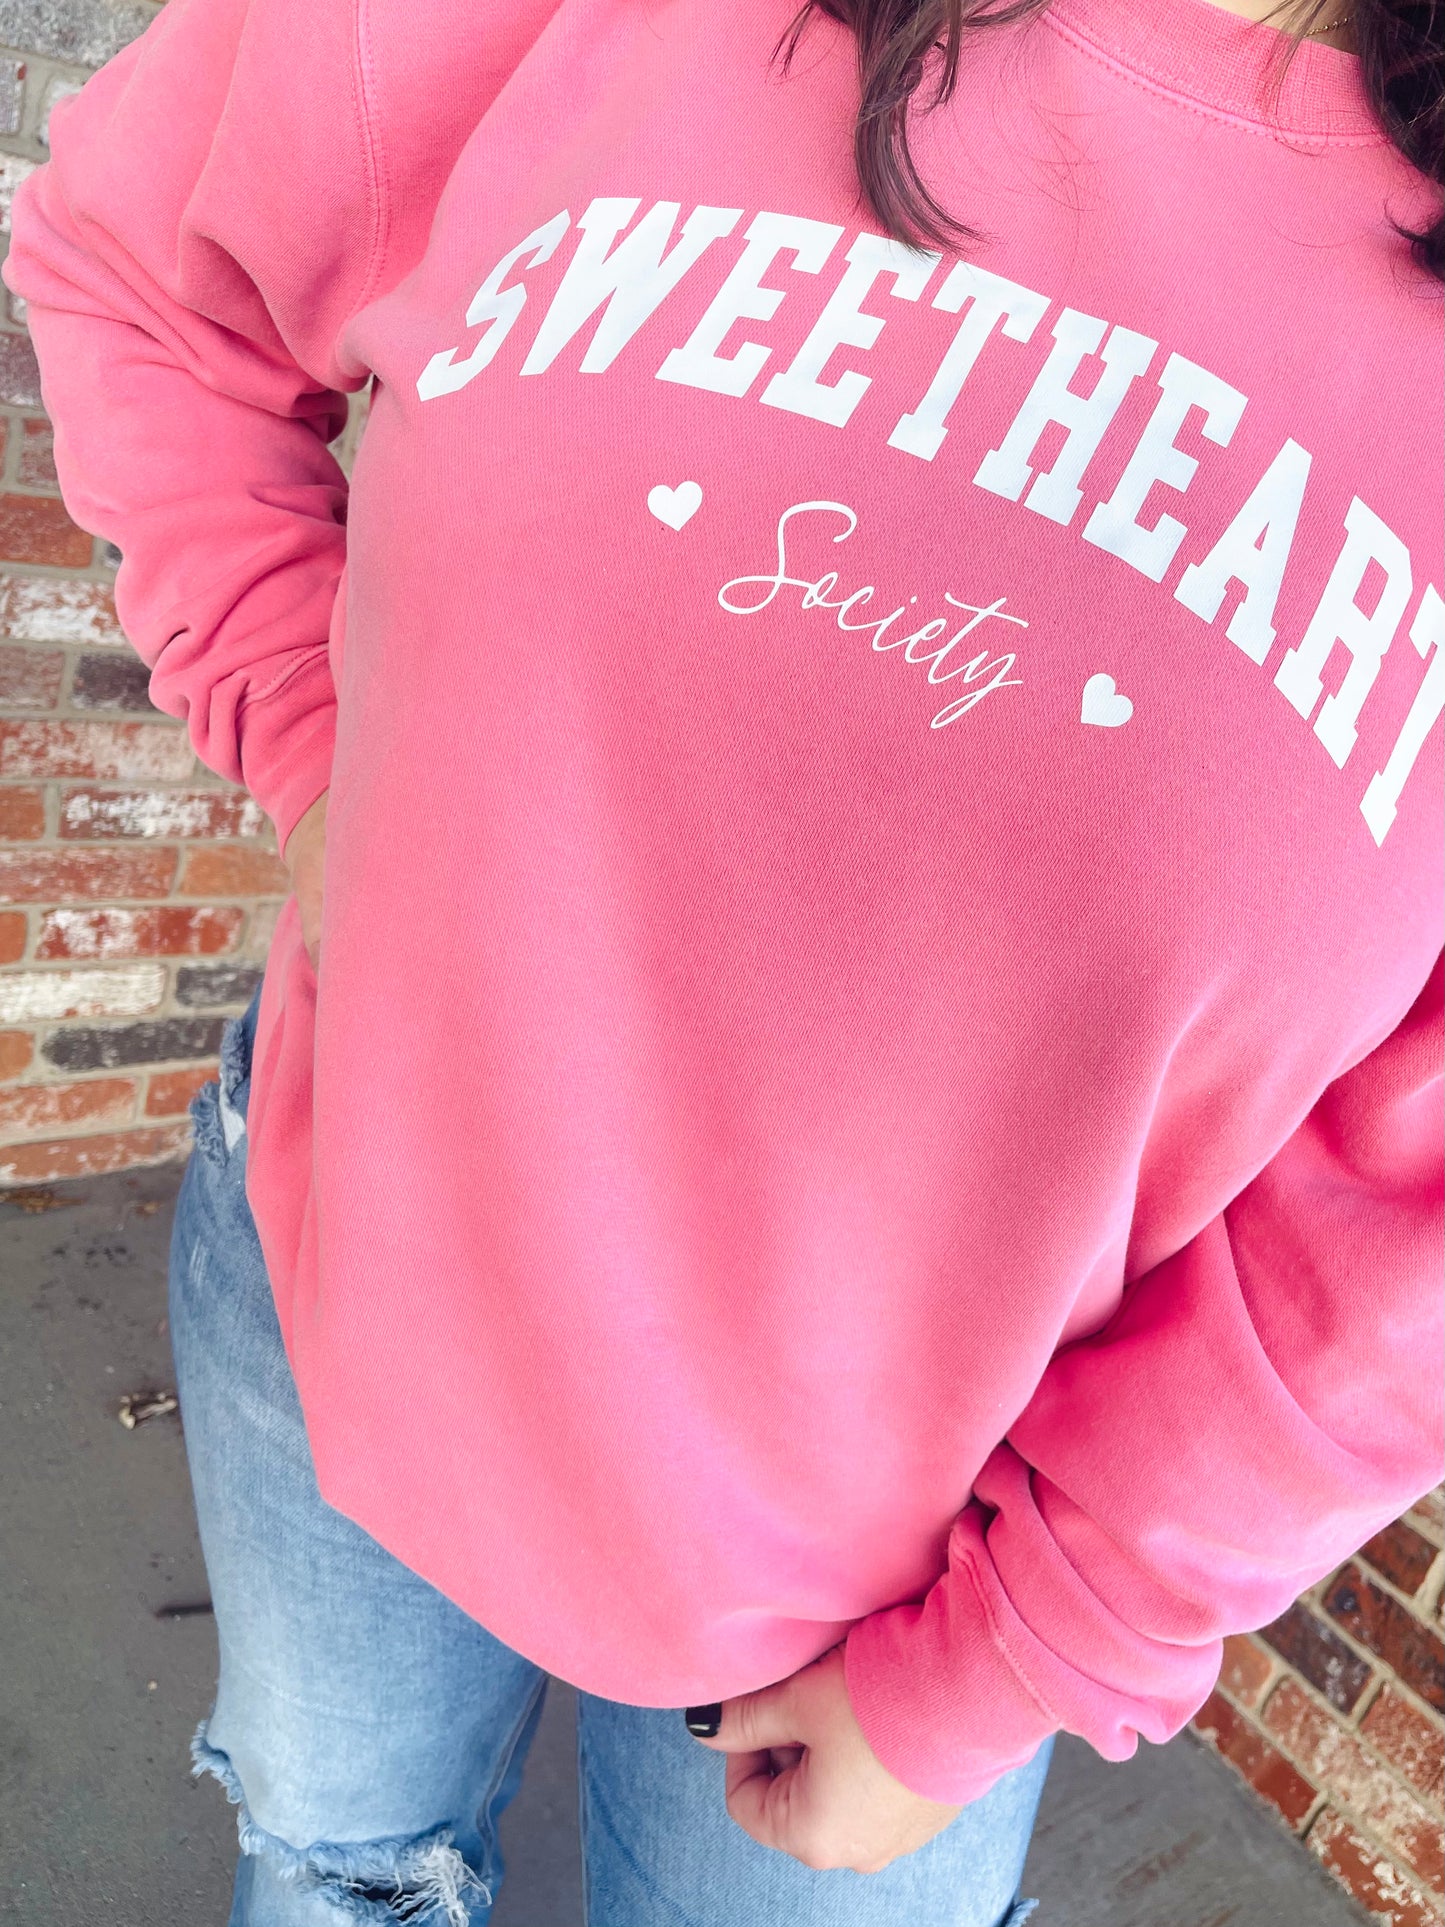 Sweetheart Society Design